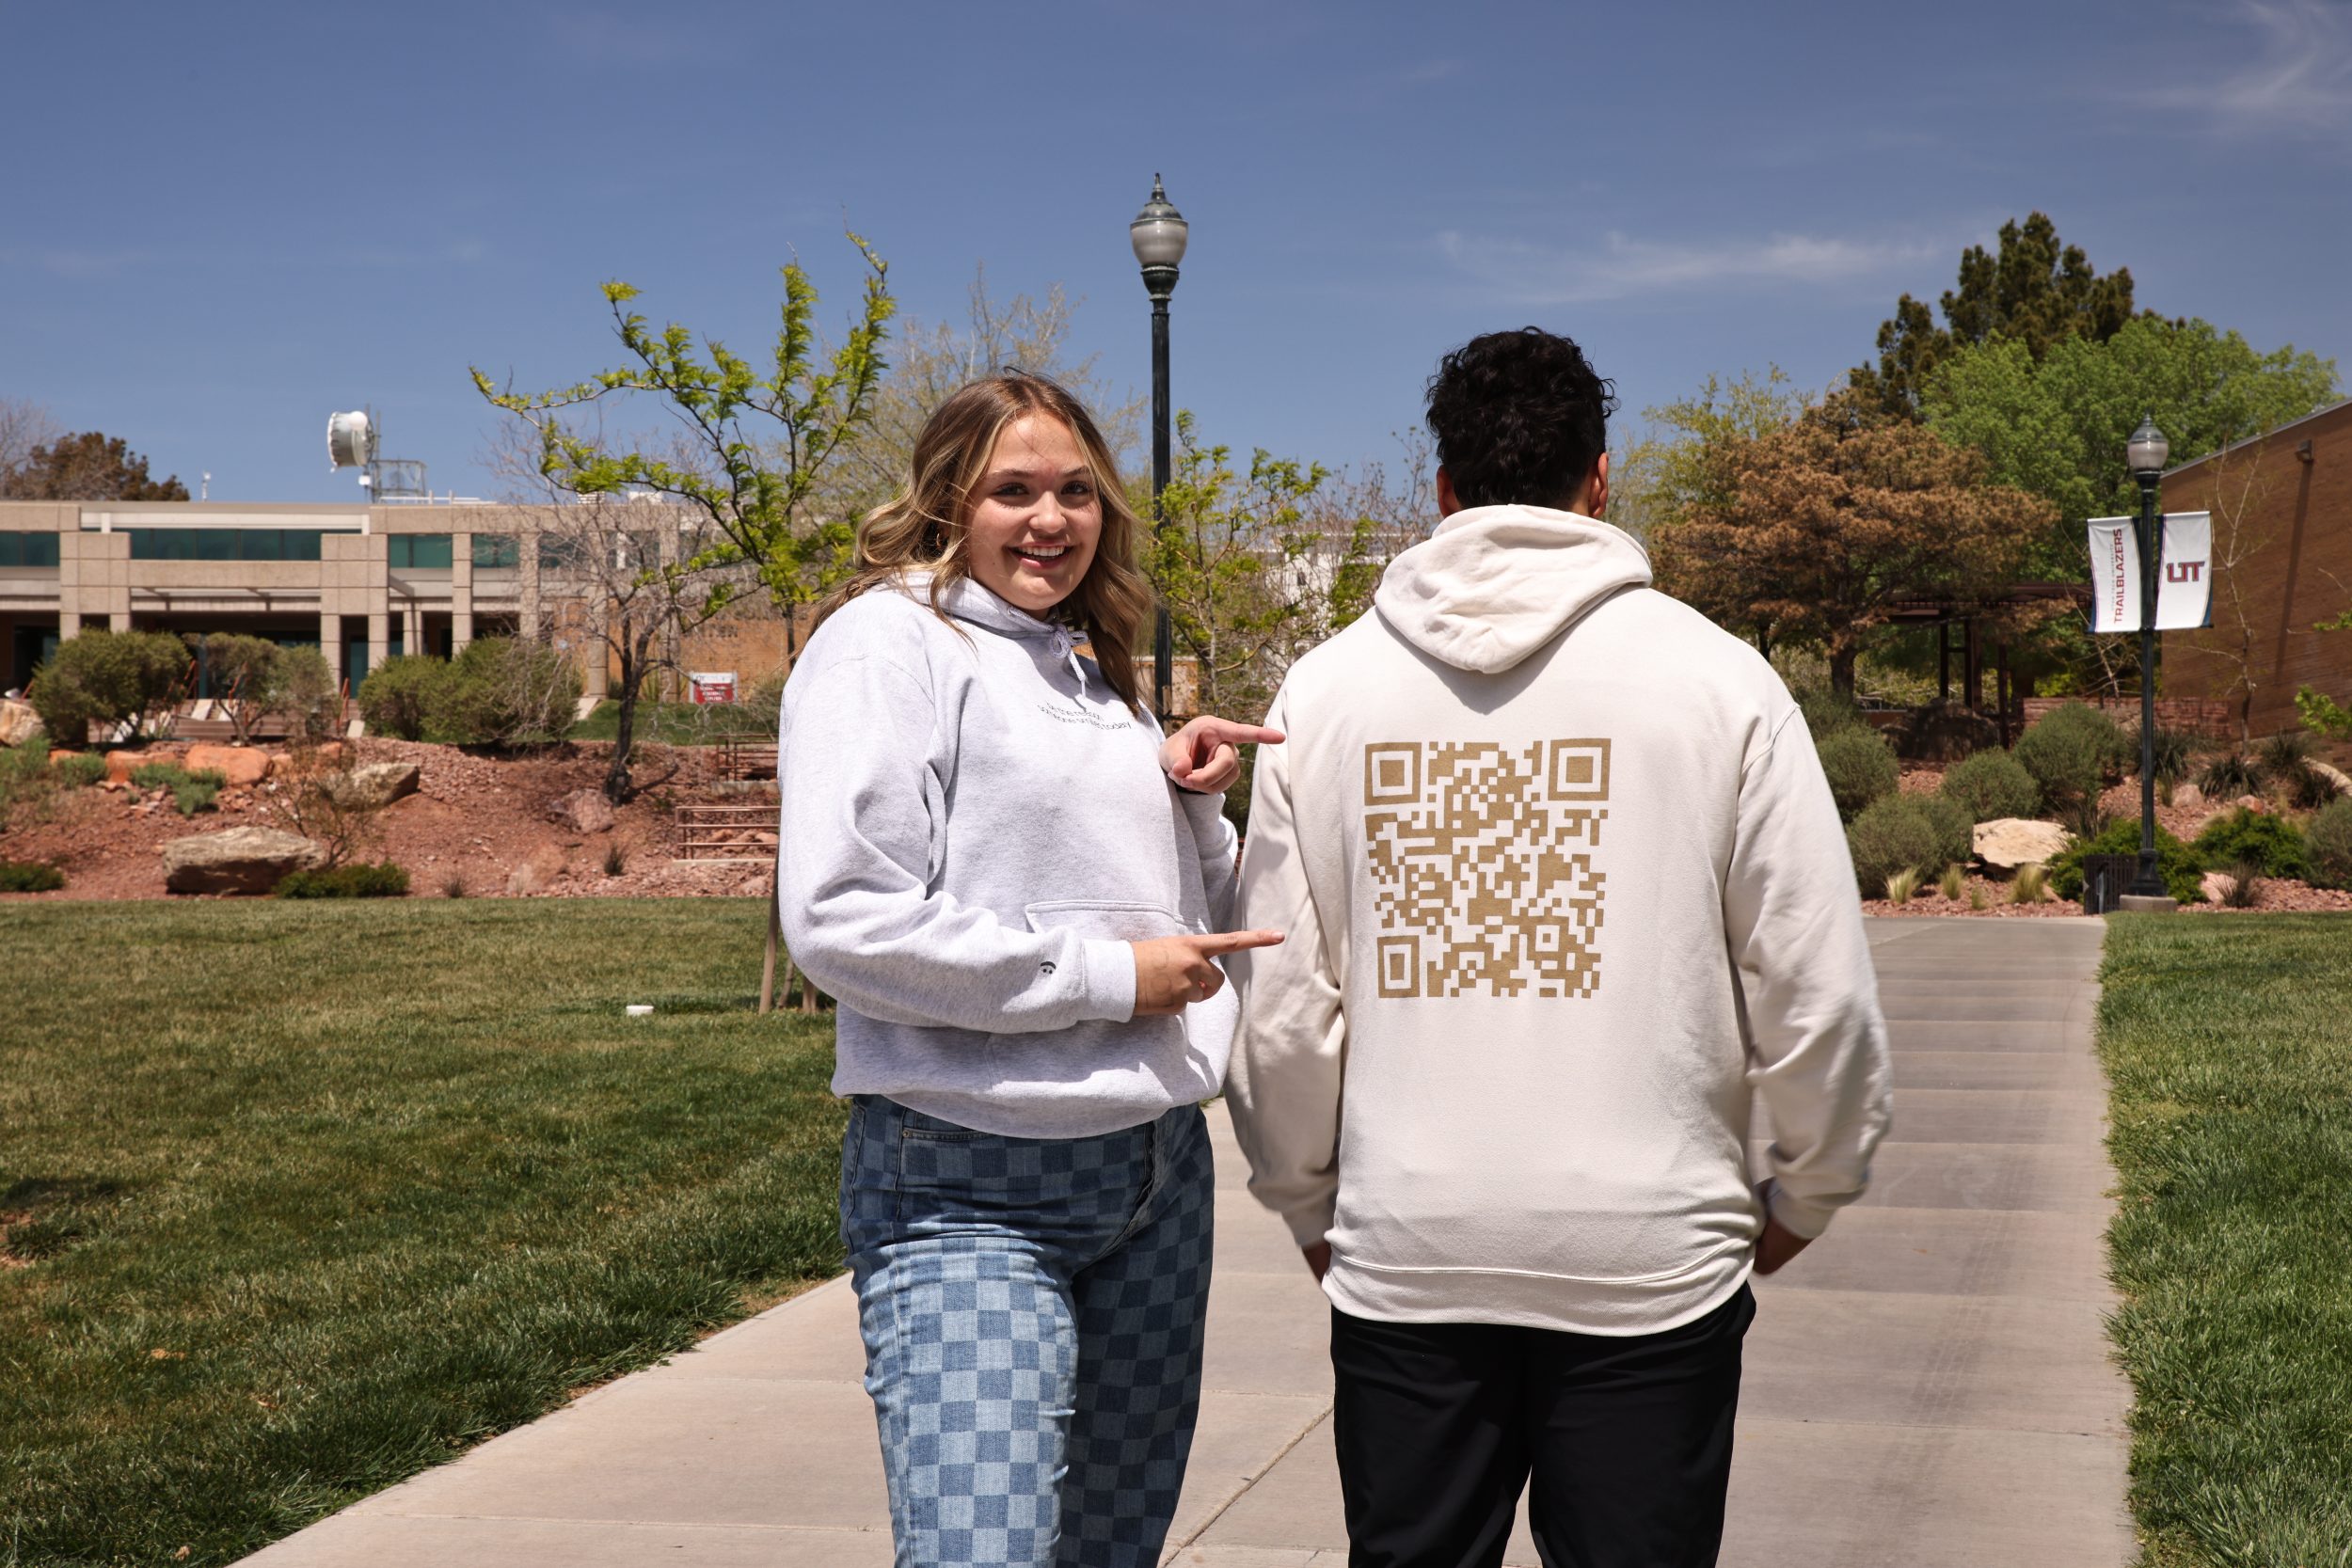 Utah Tech students spread positivity through their clothing brand